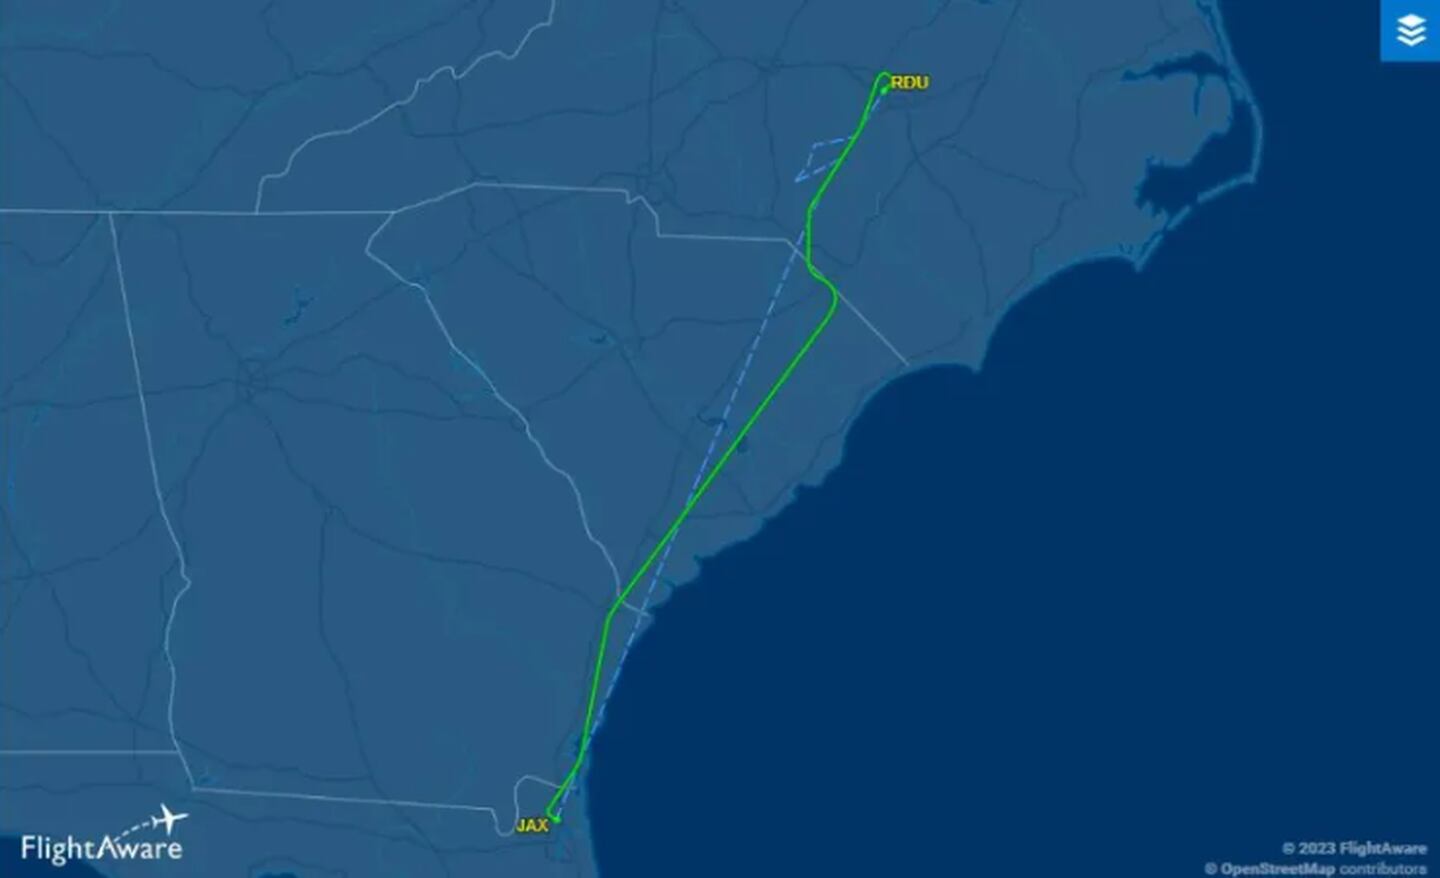 FlightAware shows American Airlines flight 3444 diverting to RDU.